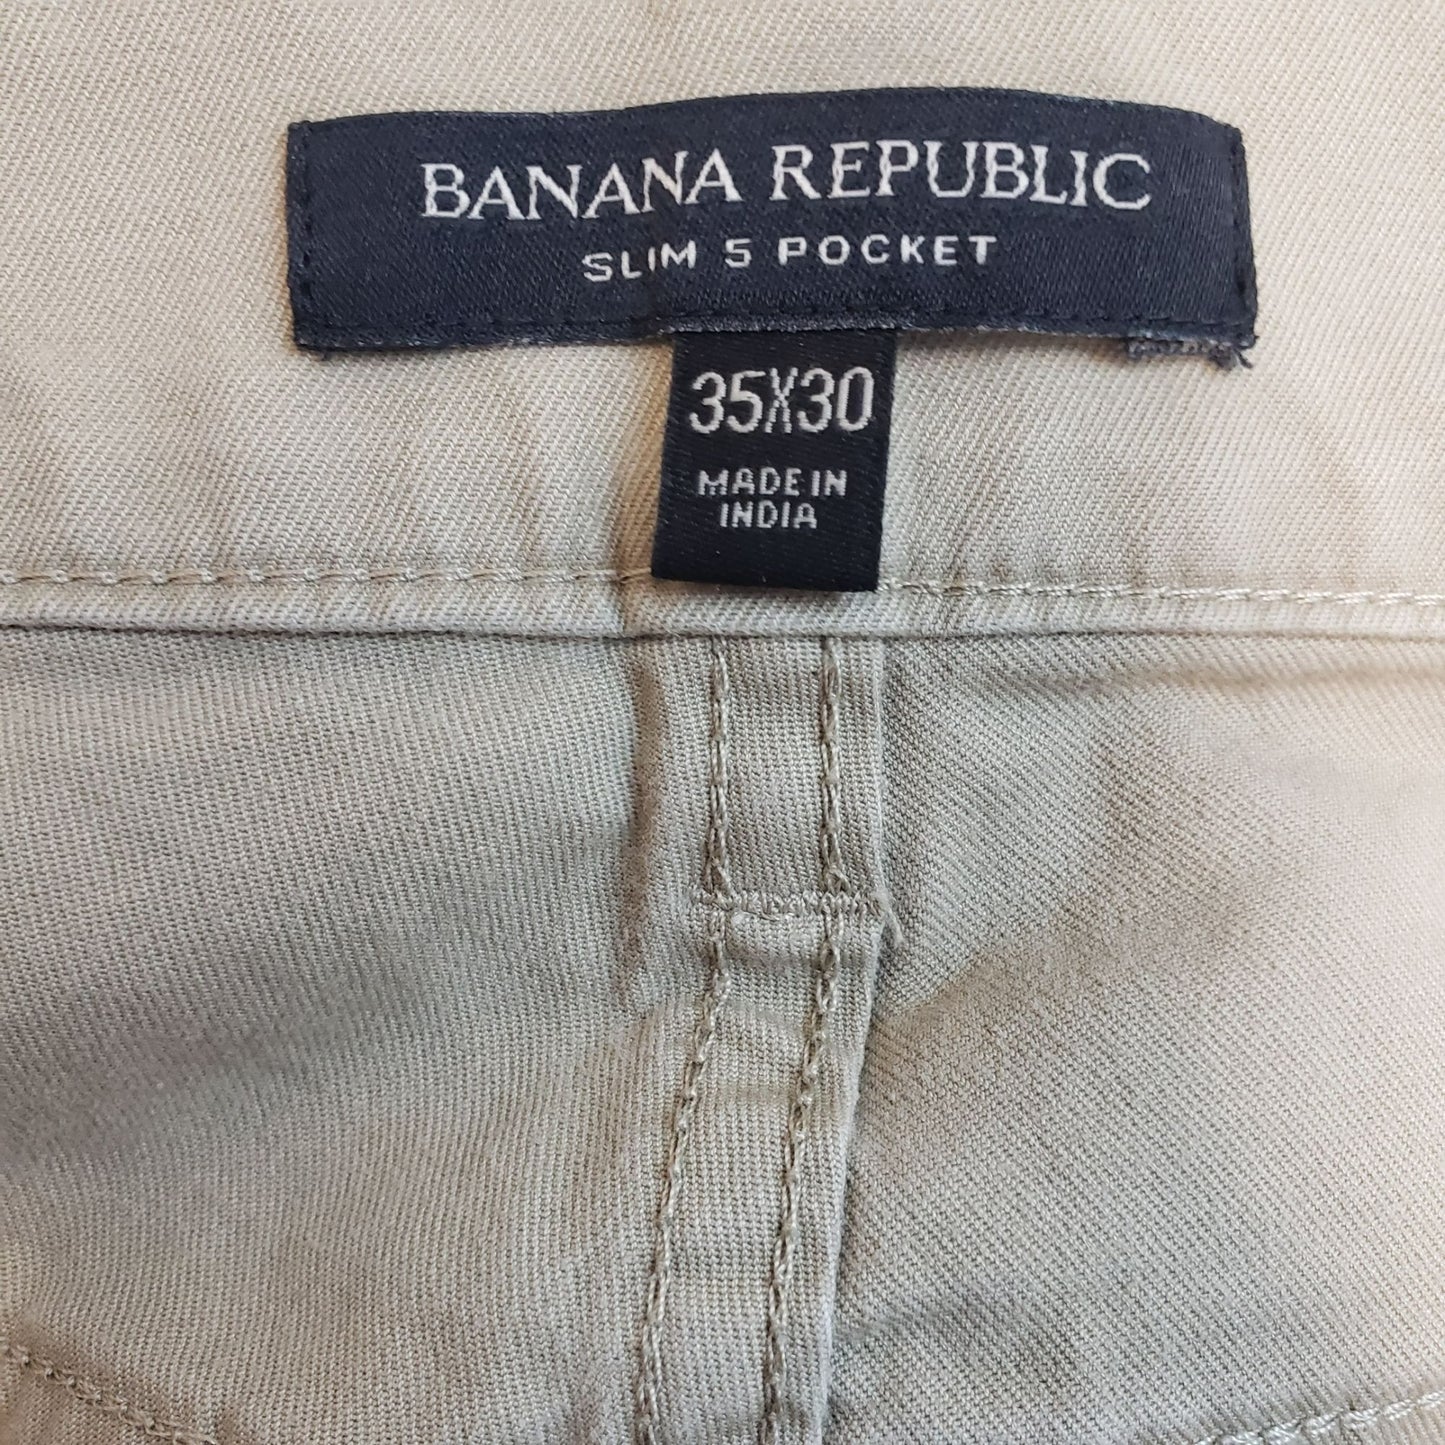 Banana Republic Slim 5 Pocket Pants Size 35x30